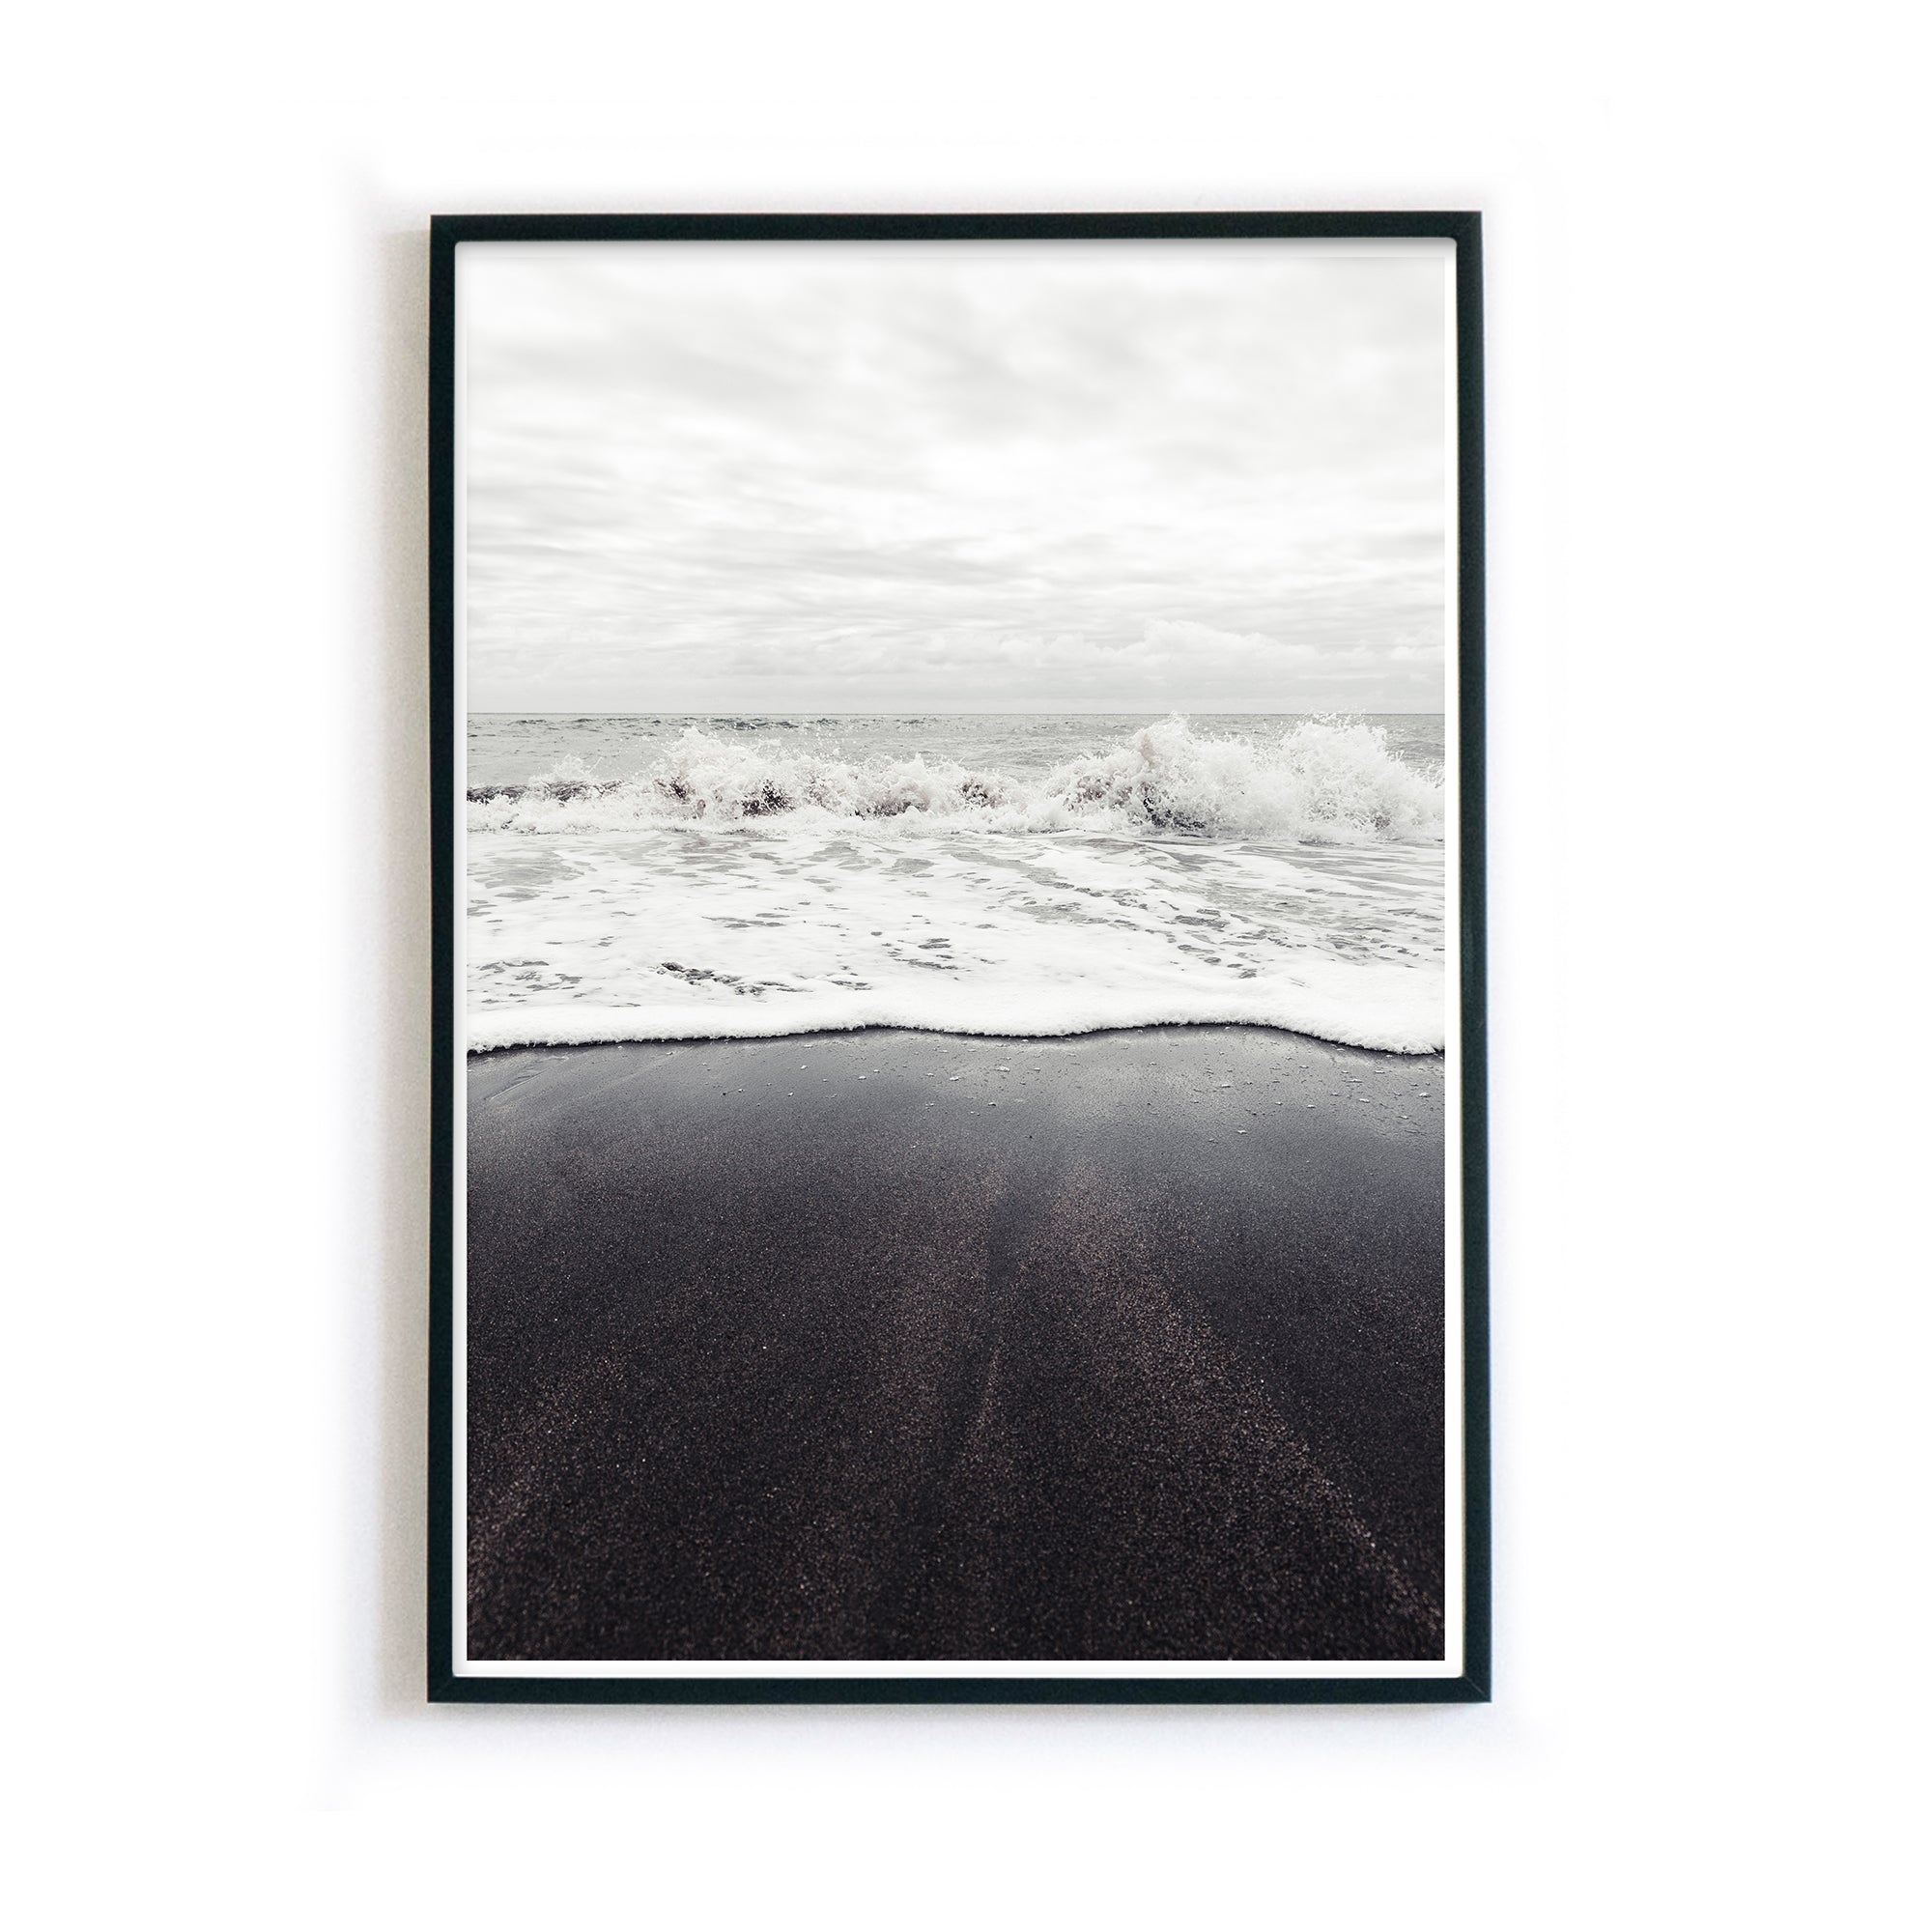 4one-Pictures-poster-natur-schwarz-weiss-strand-sand-wellen-meer-beach-4one-bilderrahmen.jpg